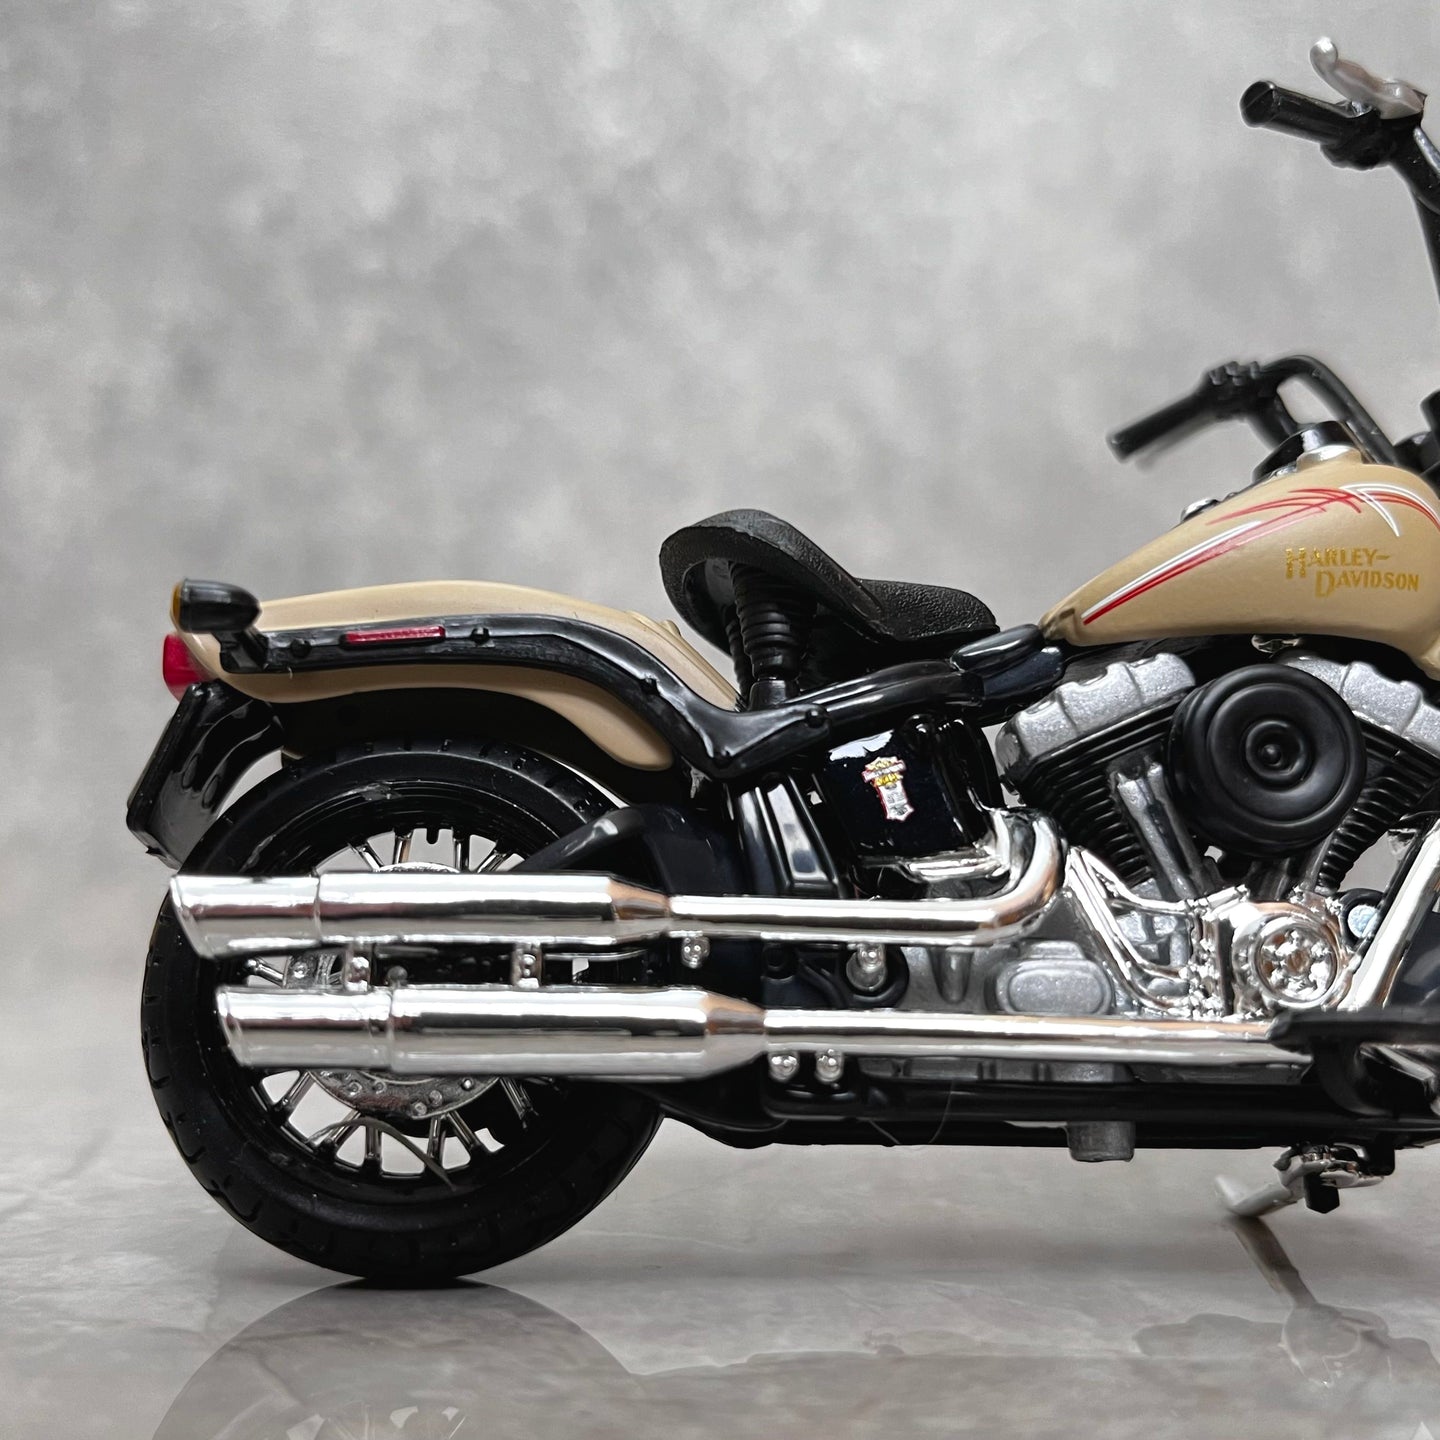 2008 Harley Davidson FLSTSB Cross Bones 1:18 Diecast Bike Motorcycle Model By Maisto